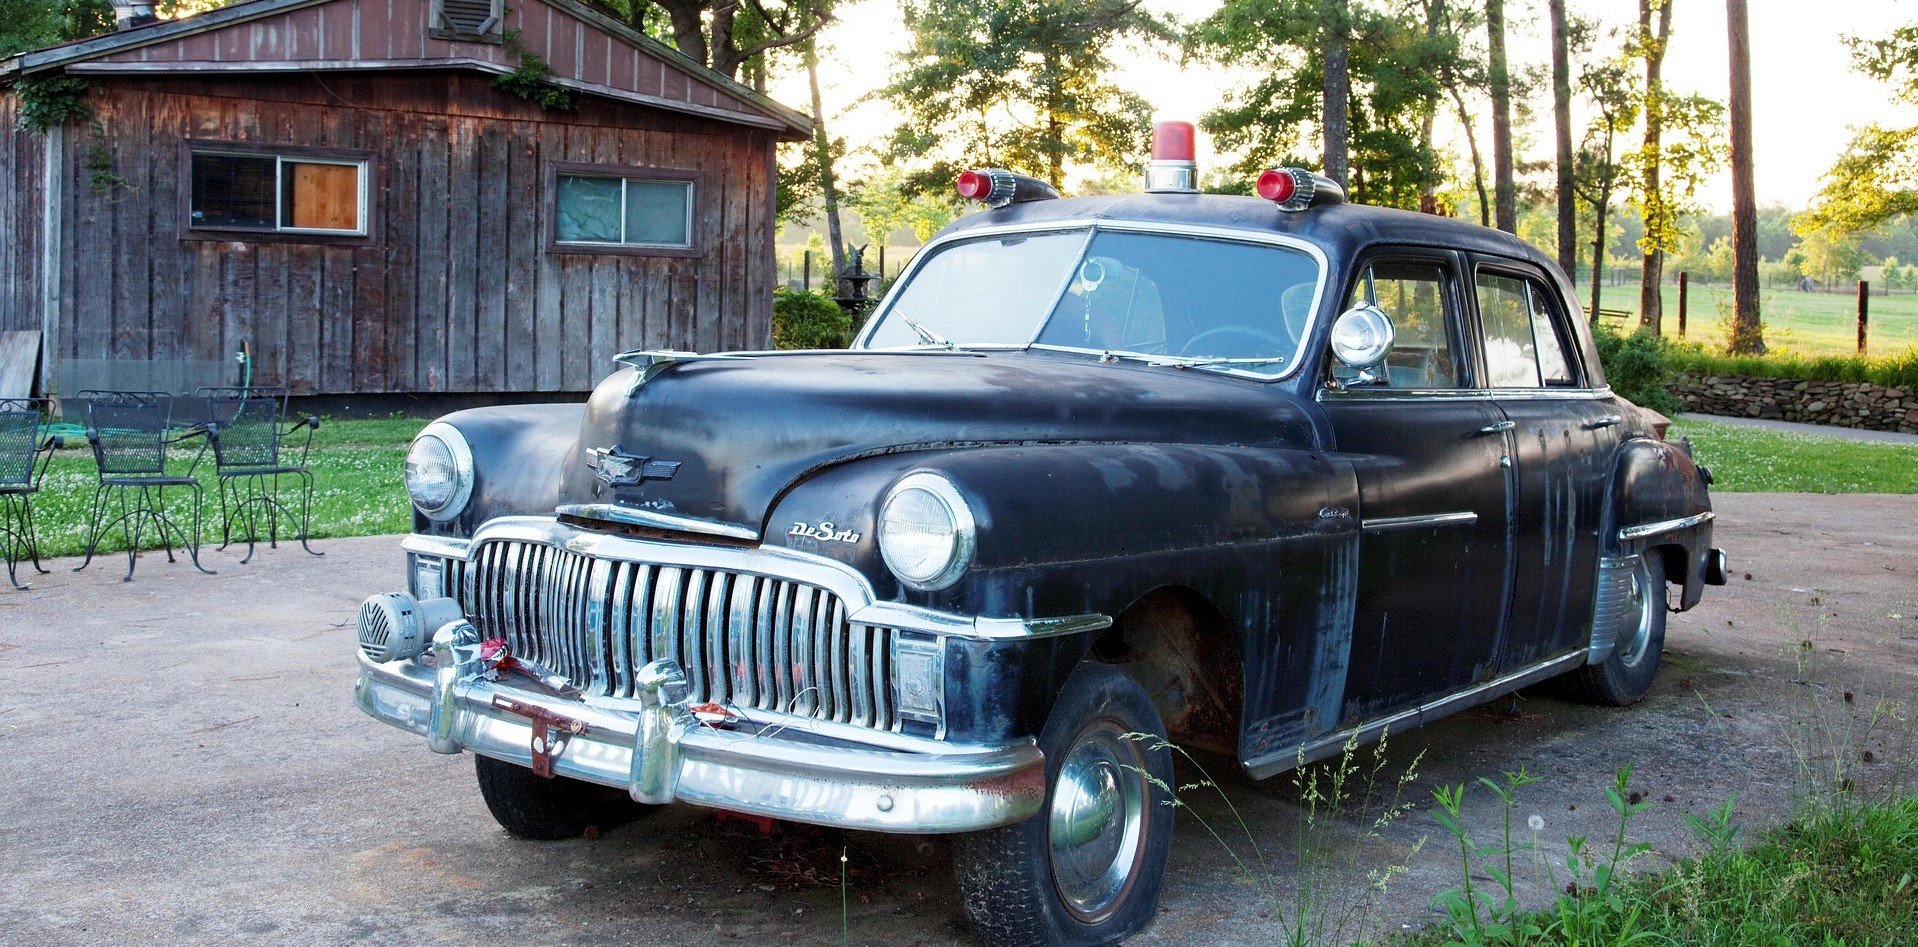 Oldtimer Car in Alabama - VeteranCarDonations.org